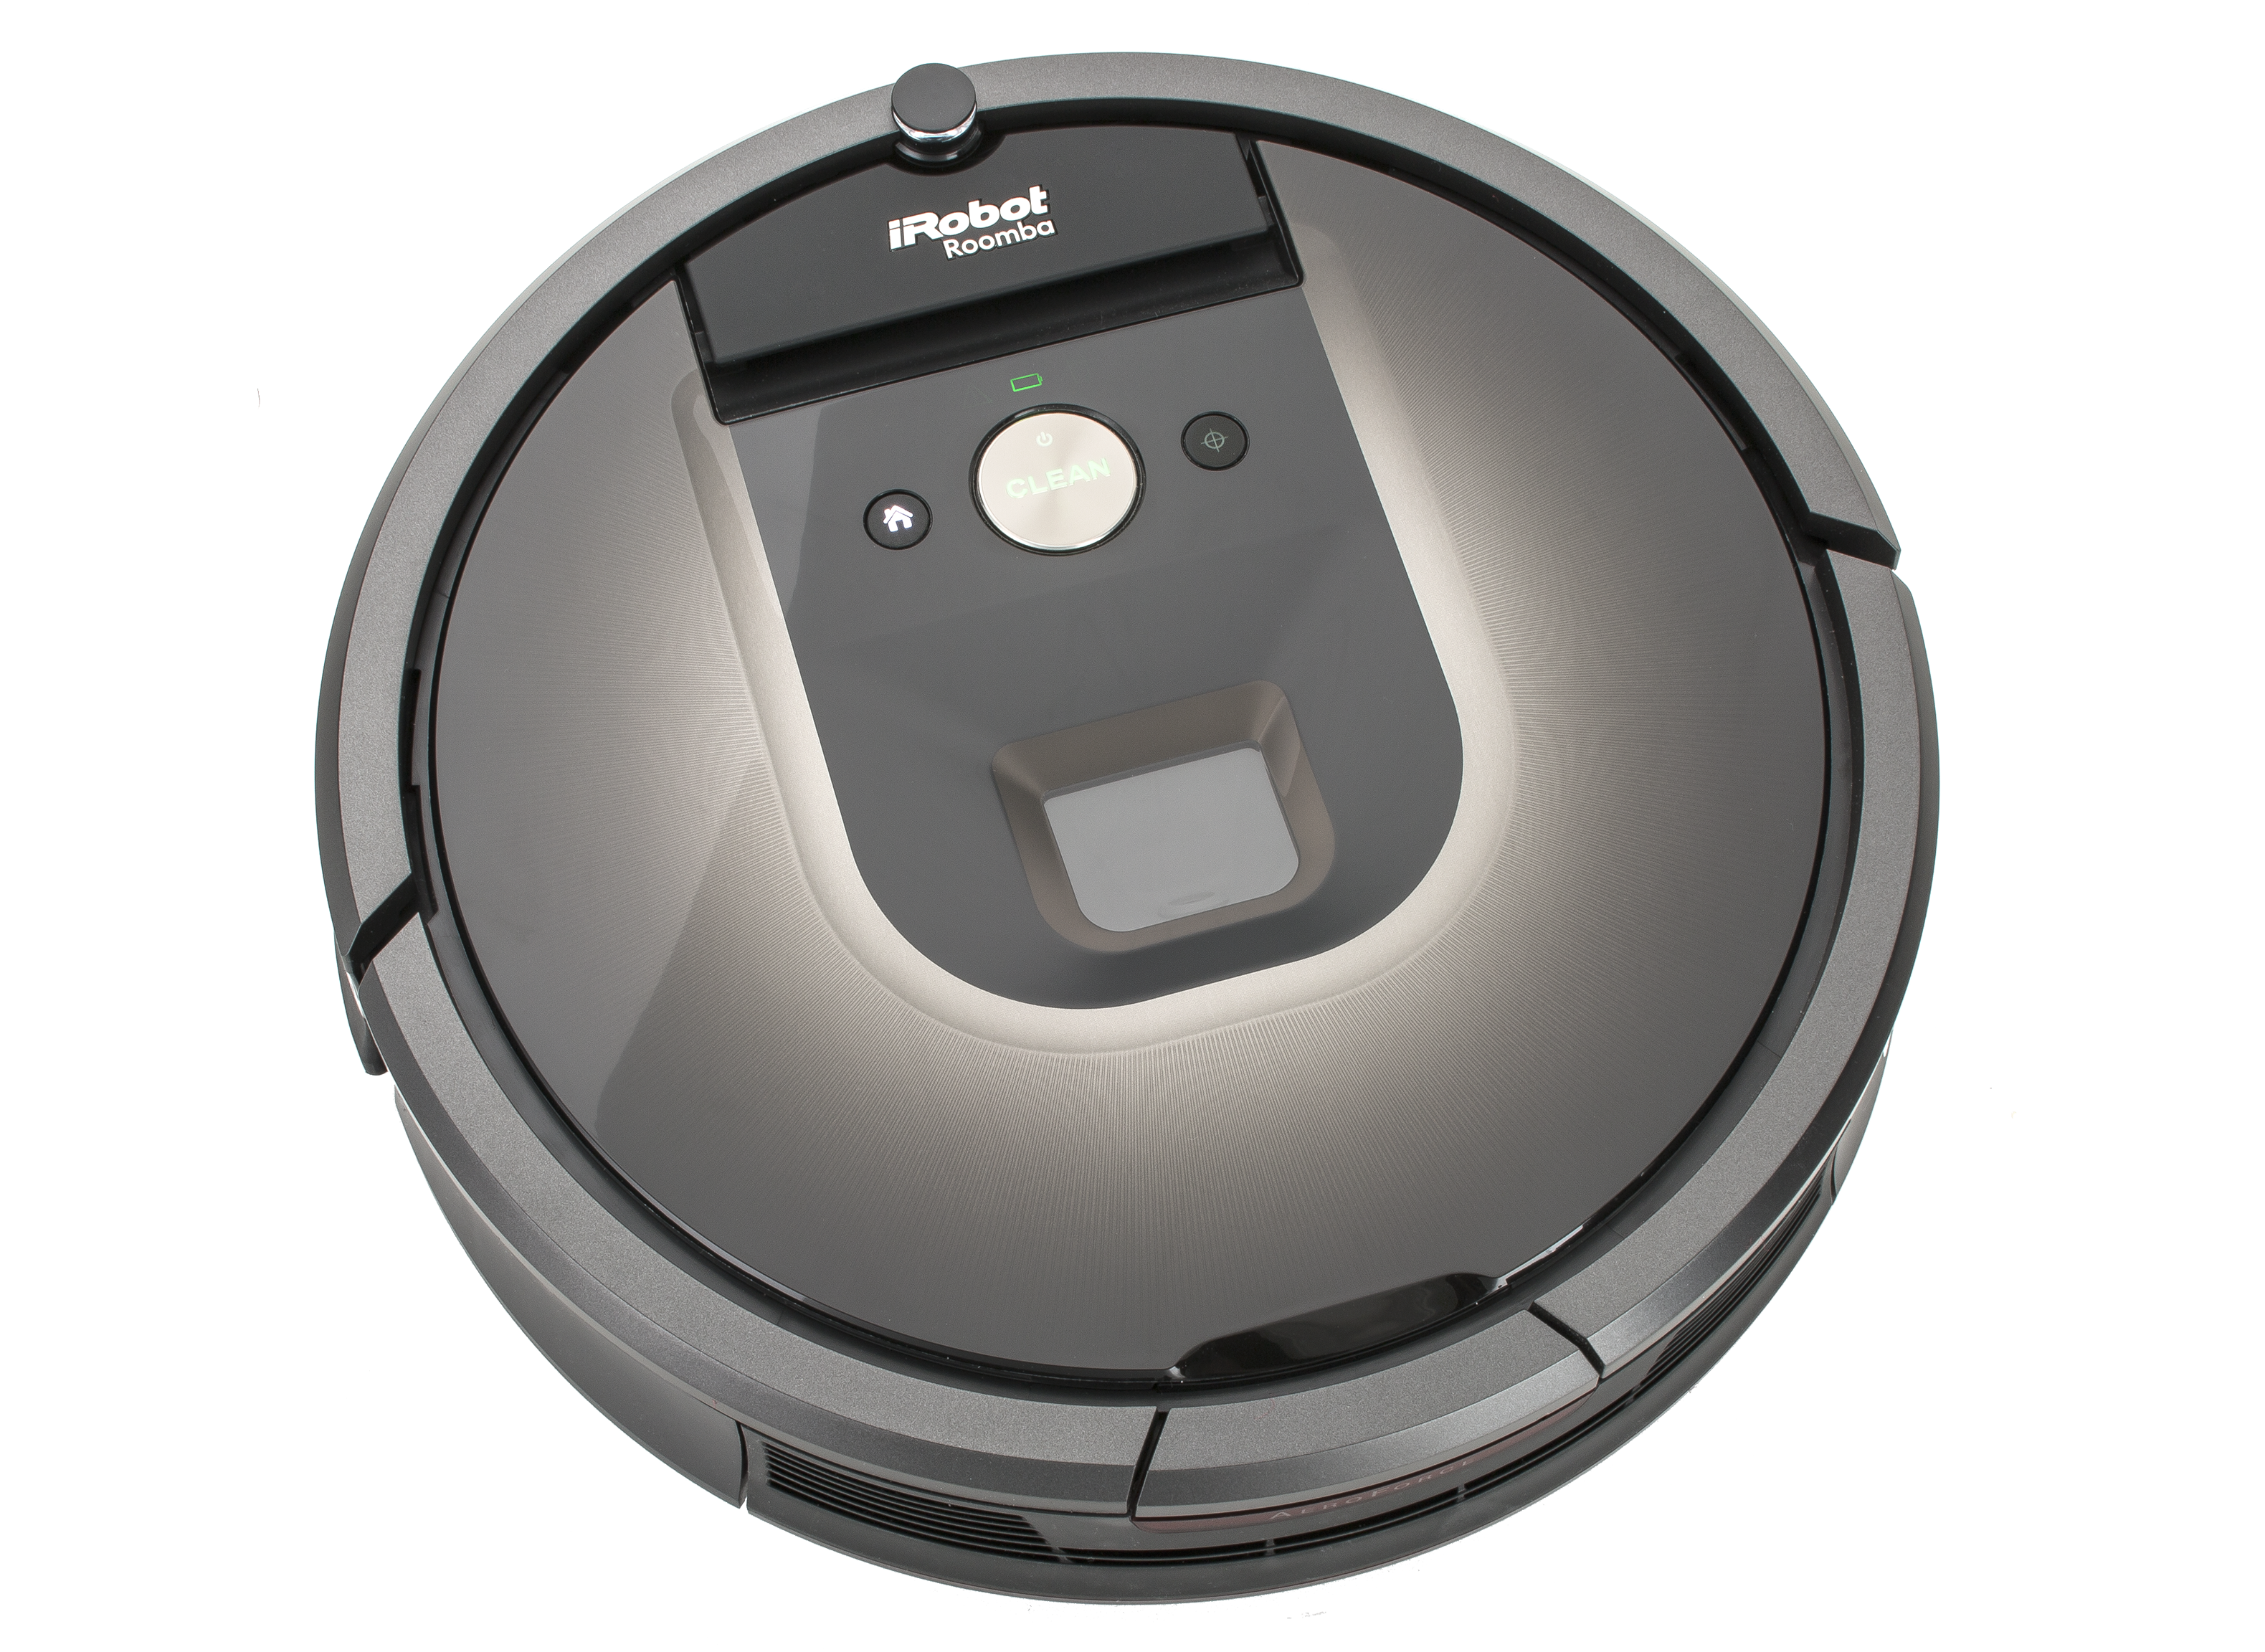 iRobot Roomba 980 Vacuum Cleaner - Reports